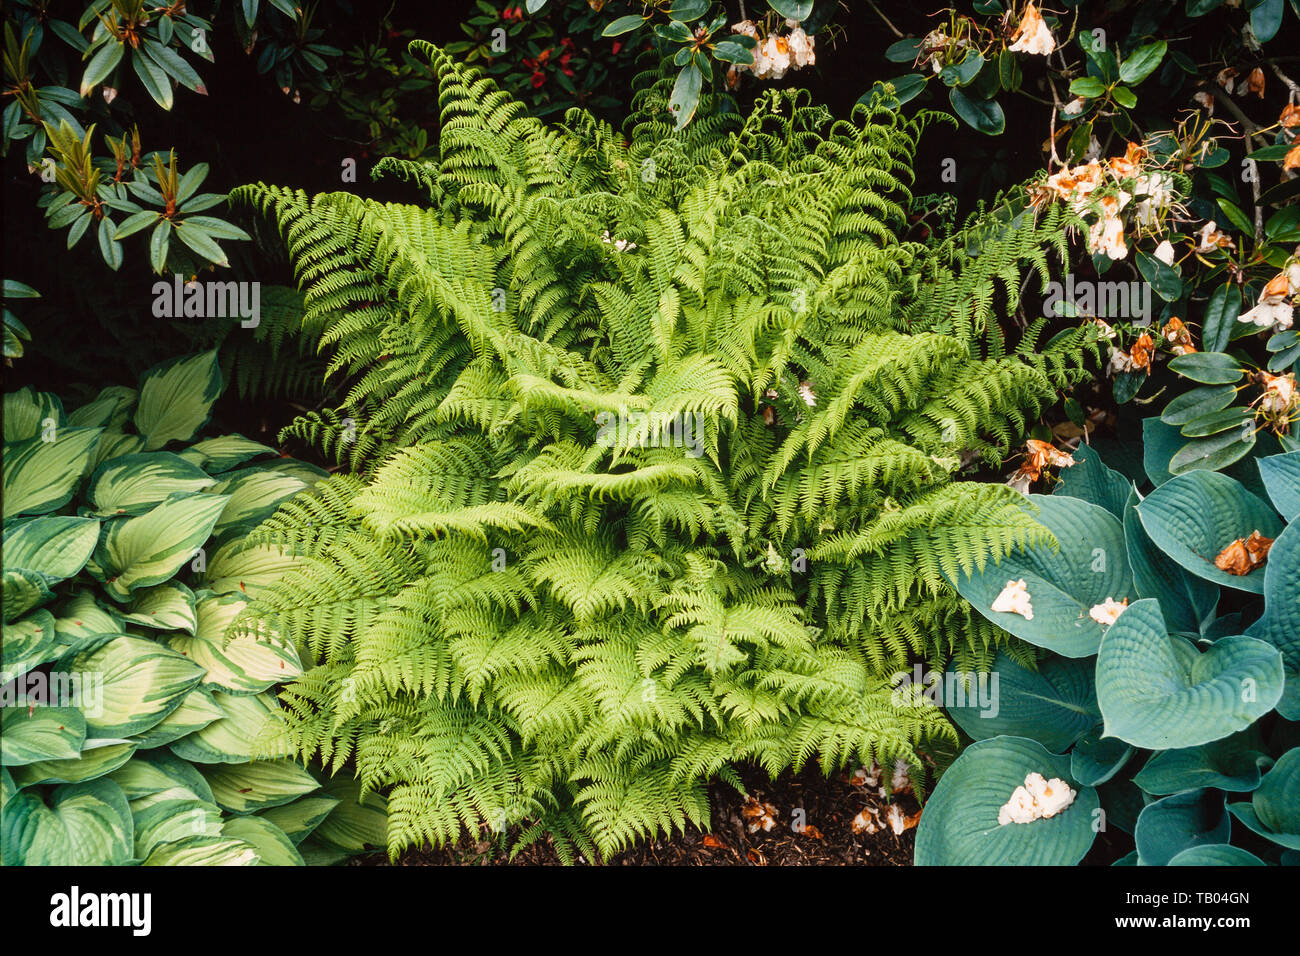 Male fern, Dryopteris sp. amongst Hostas Stock Photo